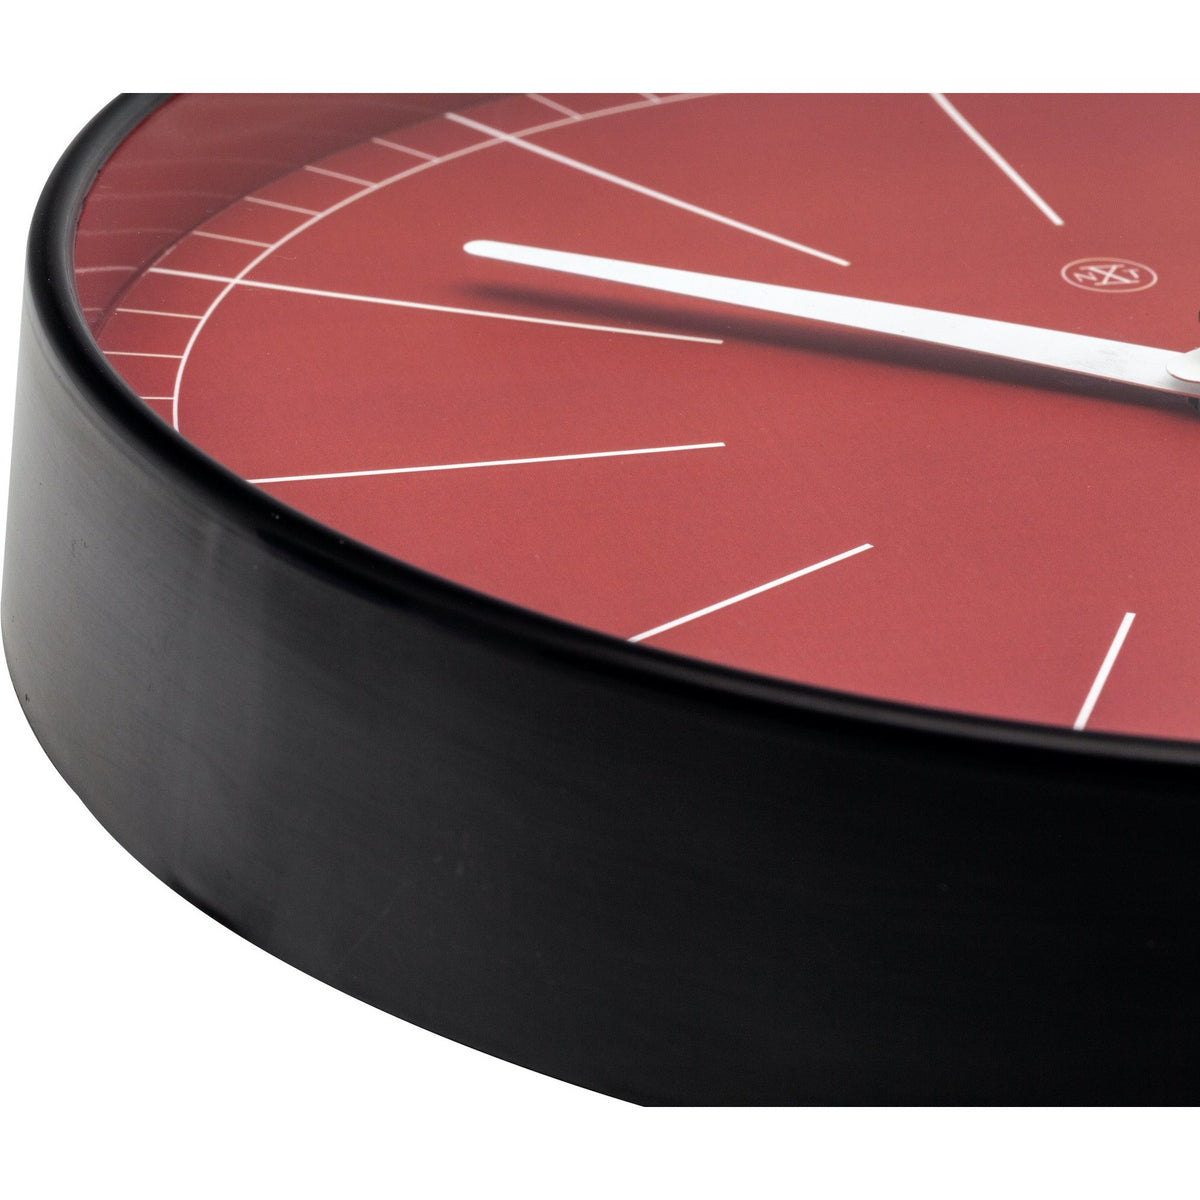 nXt - Wall clock - Ø 25 cm - Plastic - Red - &#39;Axel&#39;